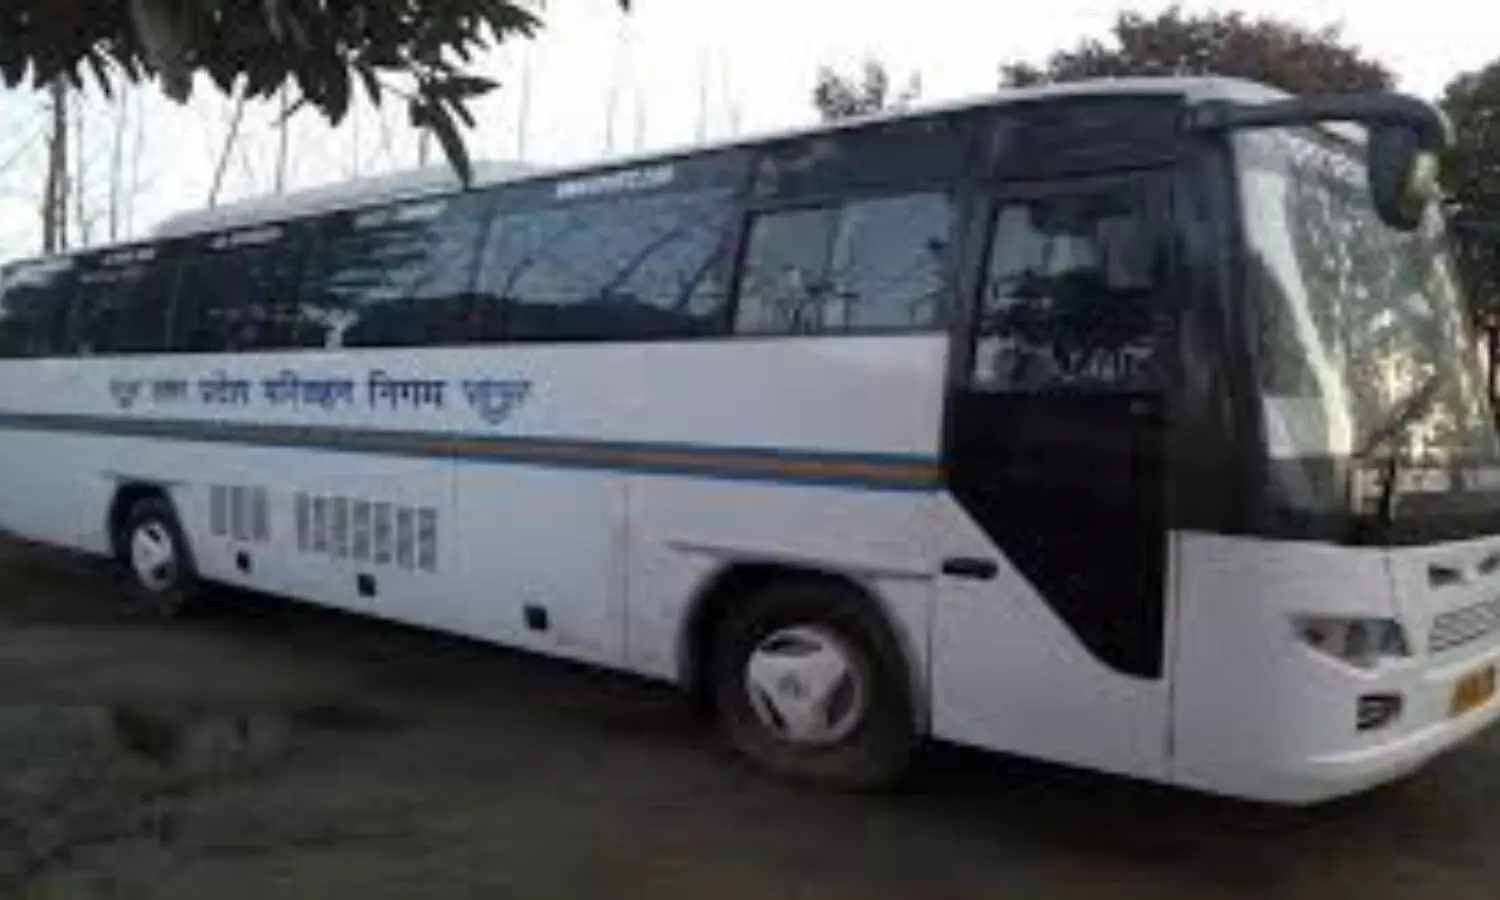 Uttar Pradesh Transport Corporation buses of Night services